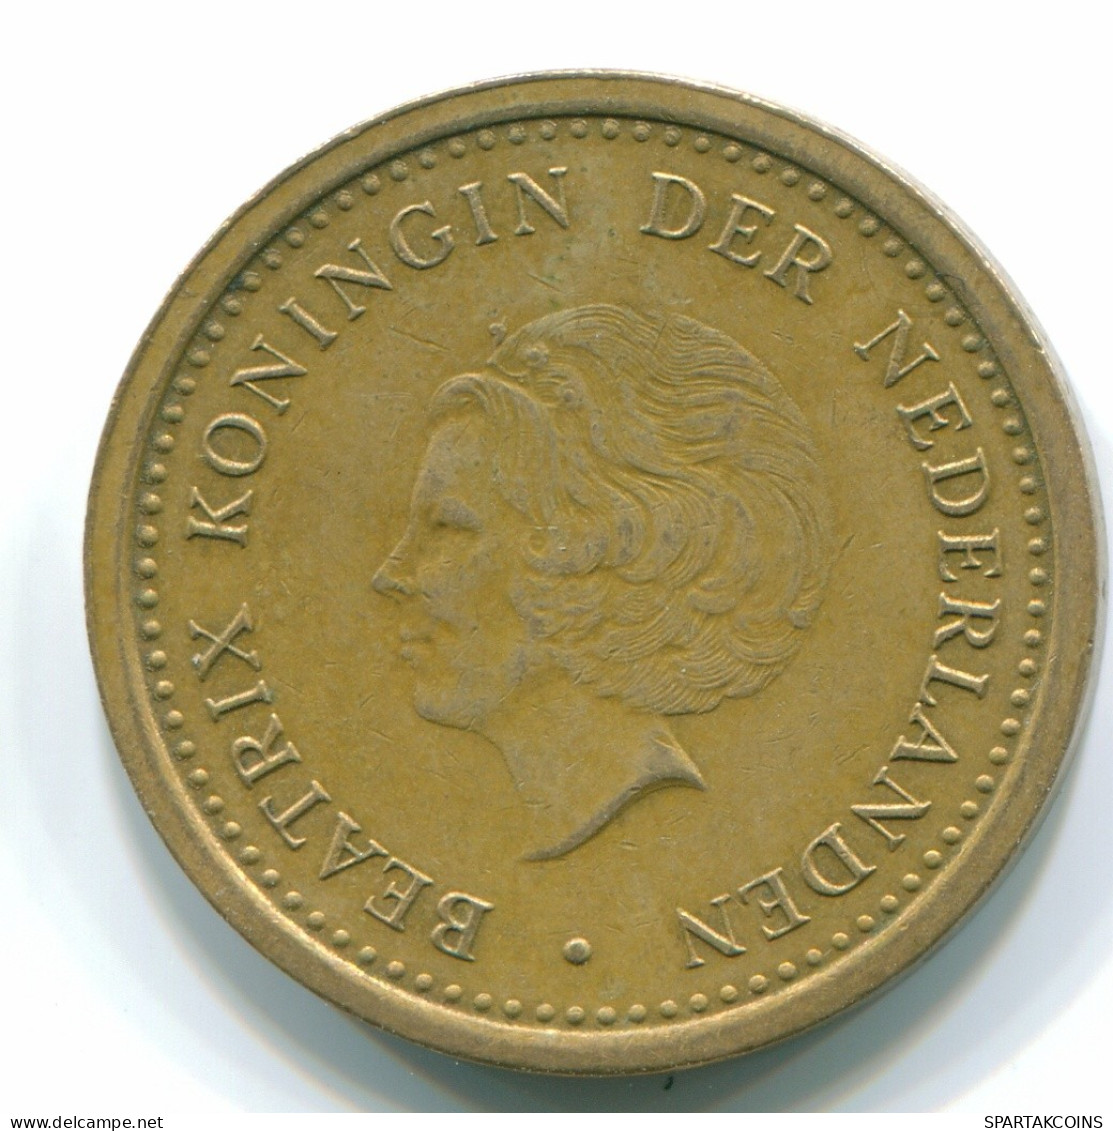 1 GULDEN 1991 NETHERLANDS ANTILLES Aureate Steel Colonial Coin #S12117.U.A - Netherlands Antilles